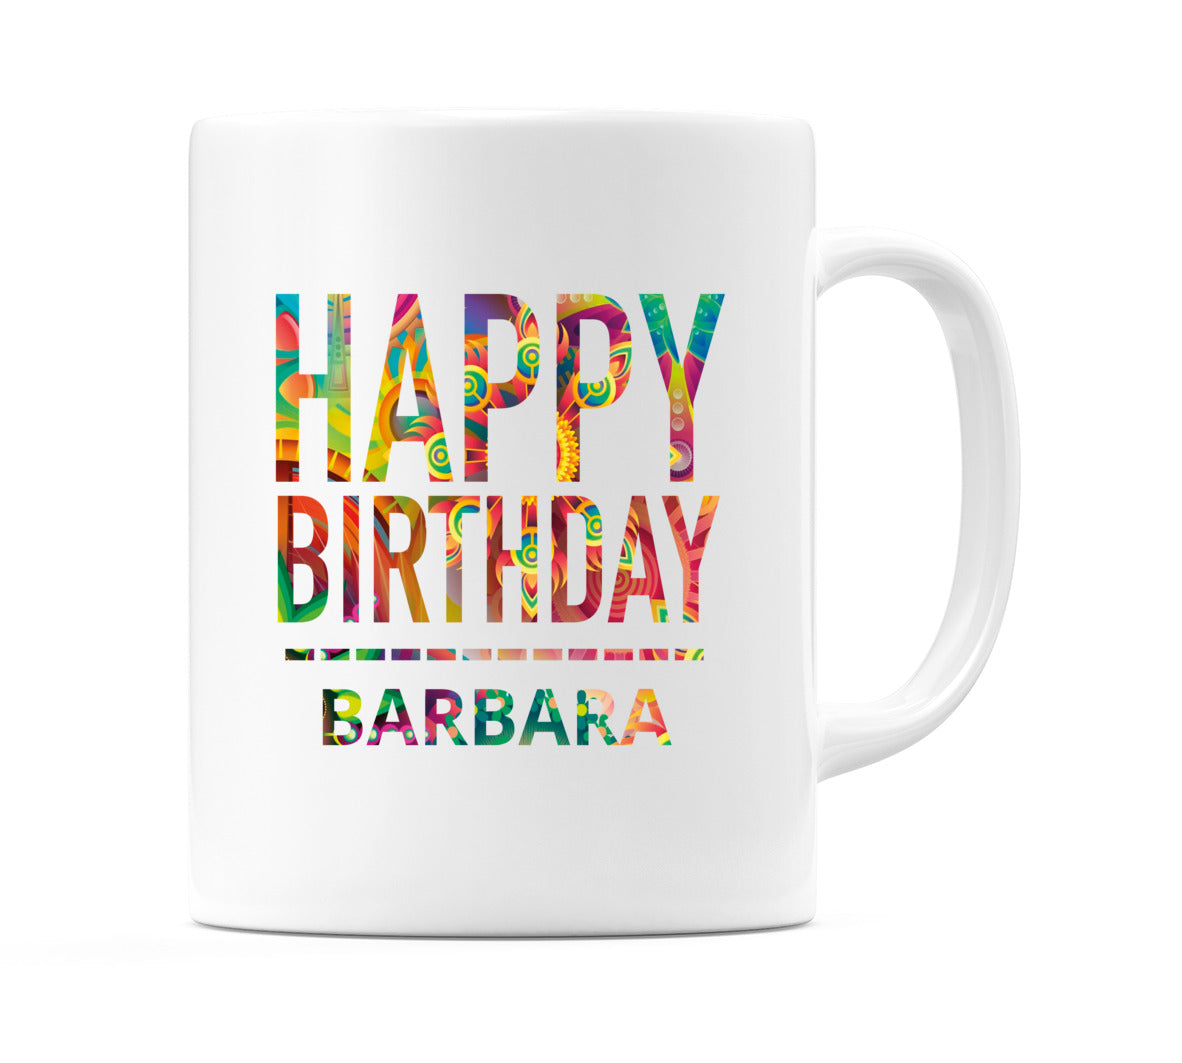 Happy Birthday Barbara (Tie Dye Effect) Mug Cup by WeDoMugs